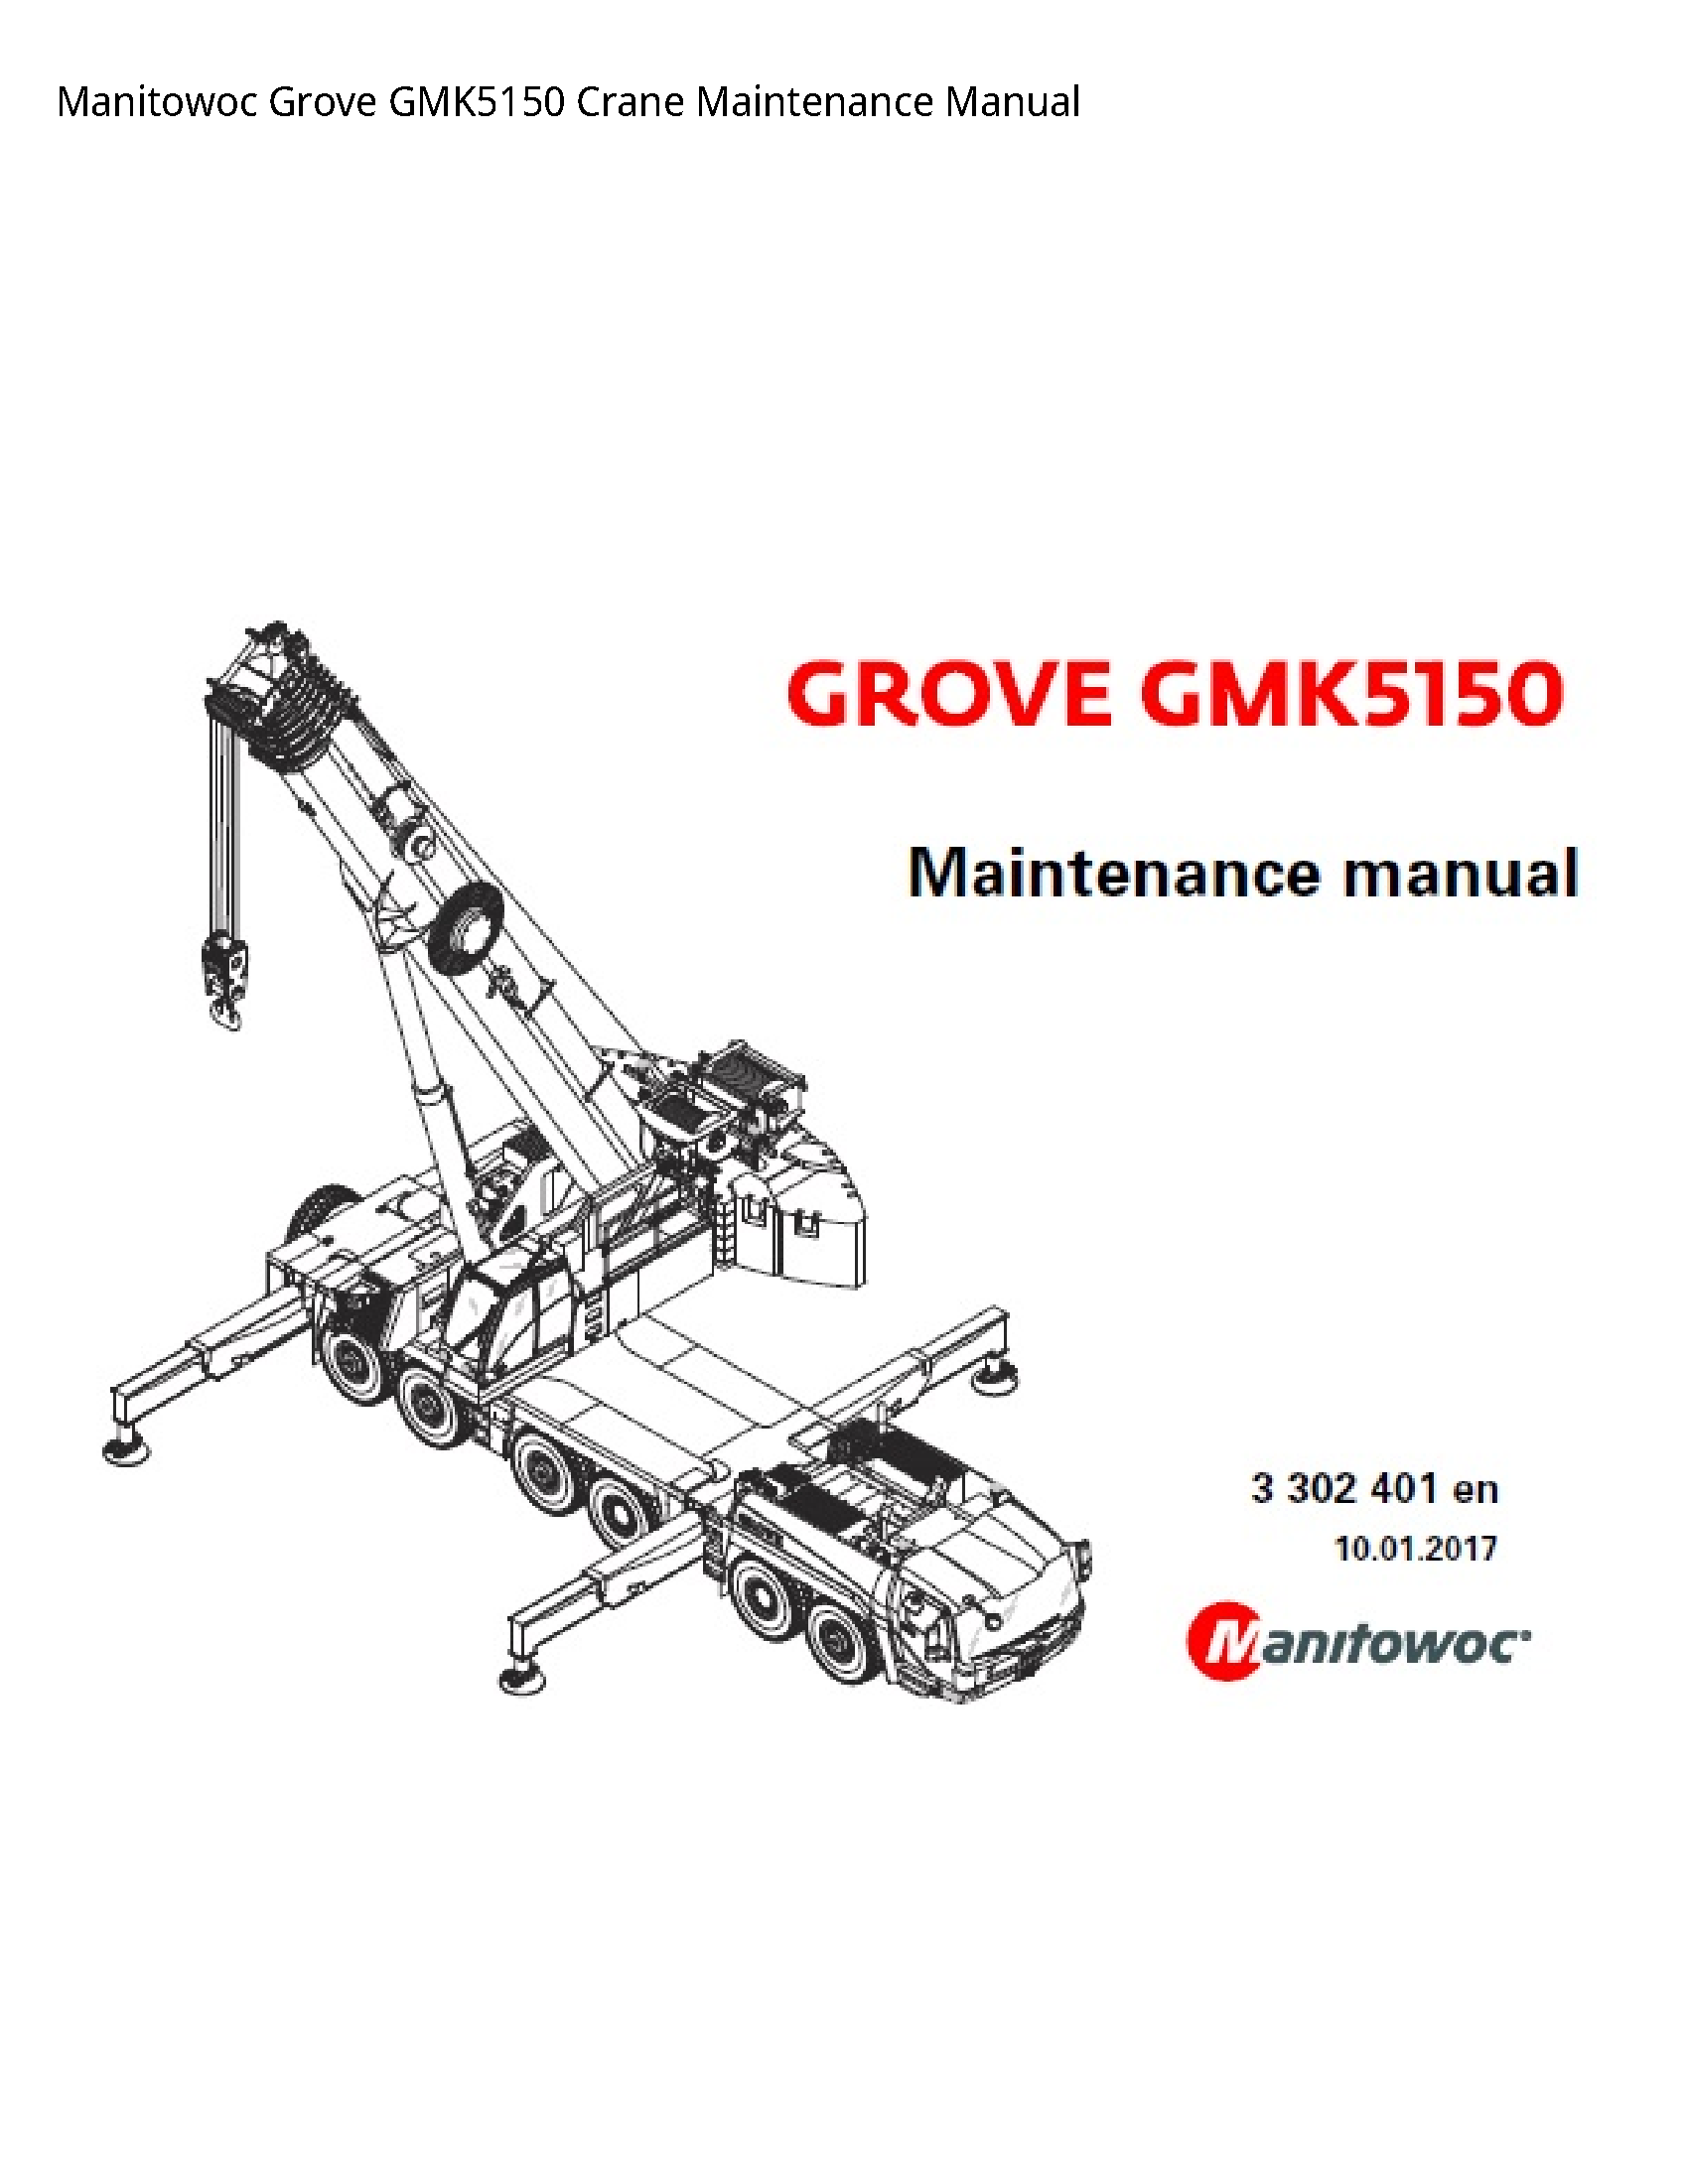 Manitowoc GMK5150 Grove Crane Maintenance manual